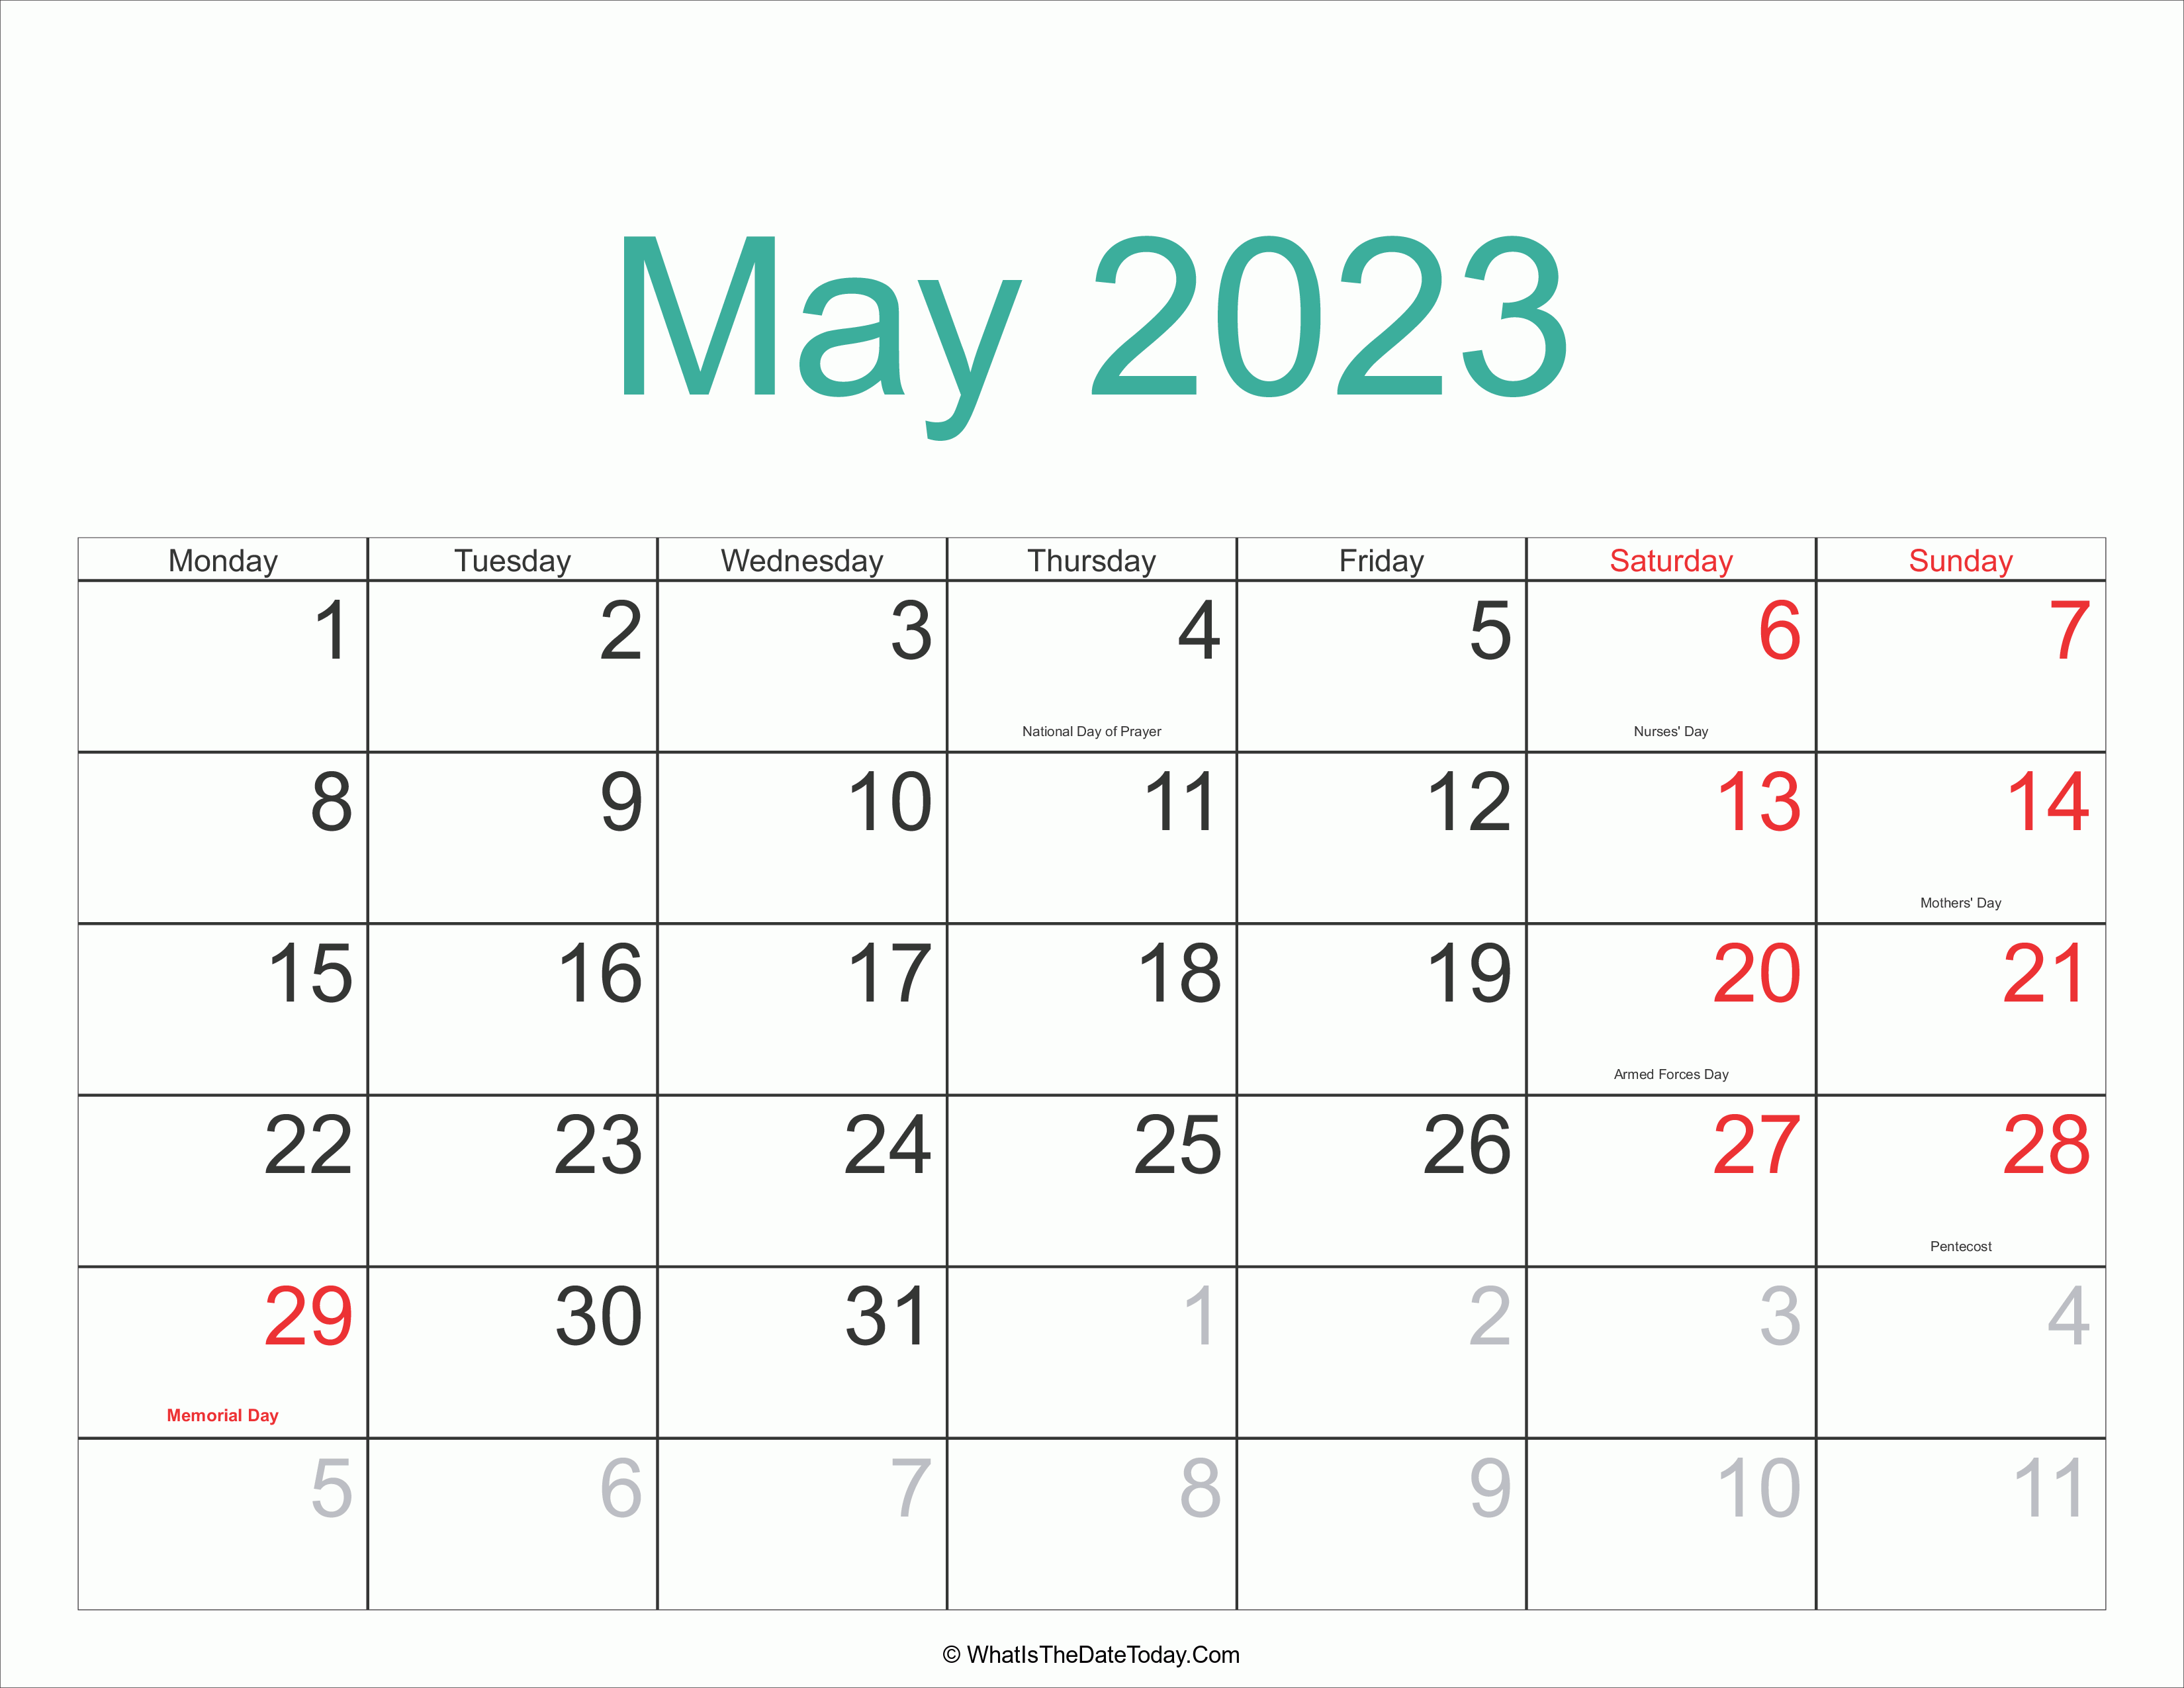 May 2023 Calendar Printable With Holidays | Whatisthedatetoday.com